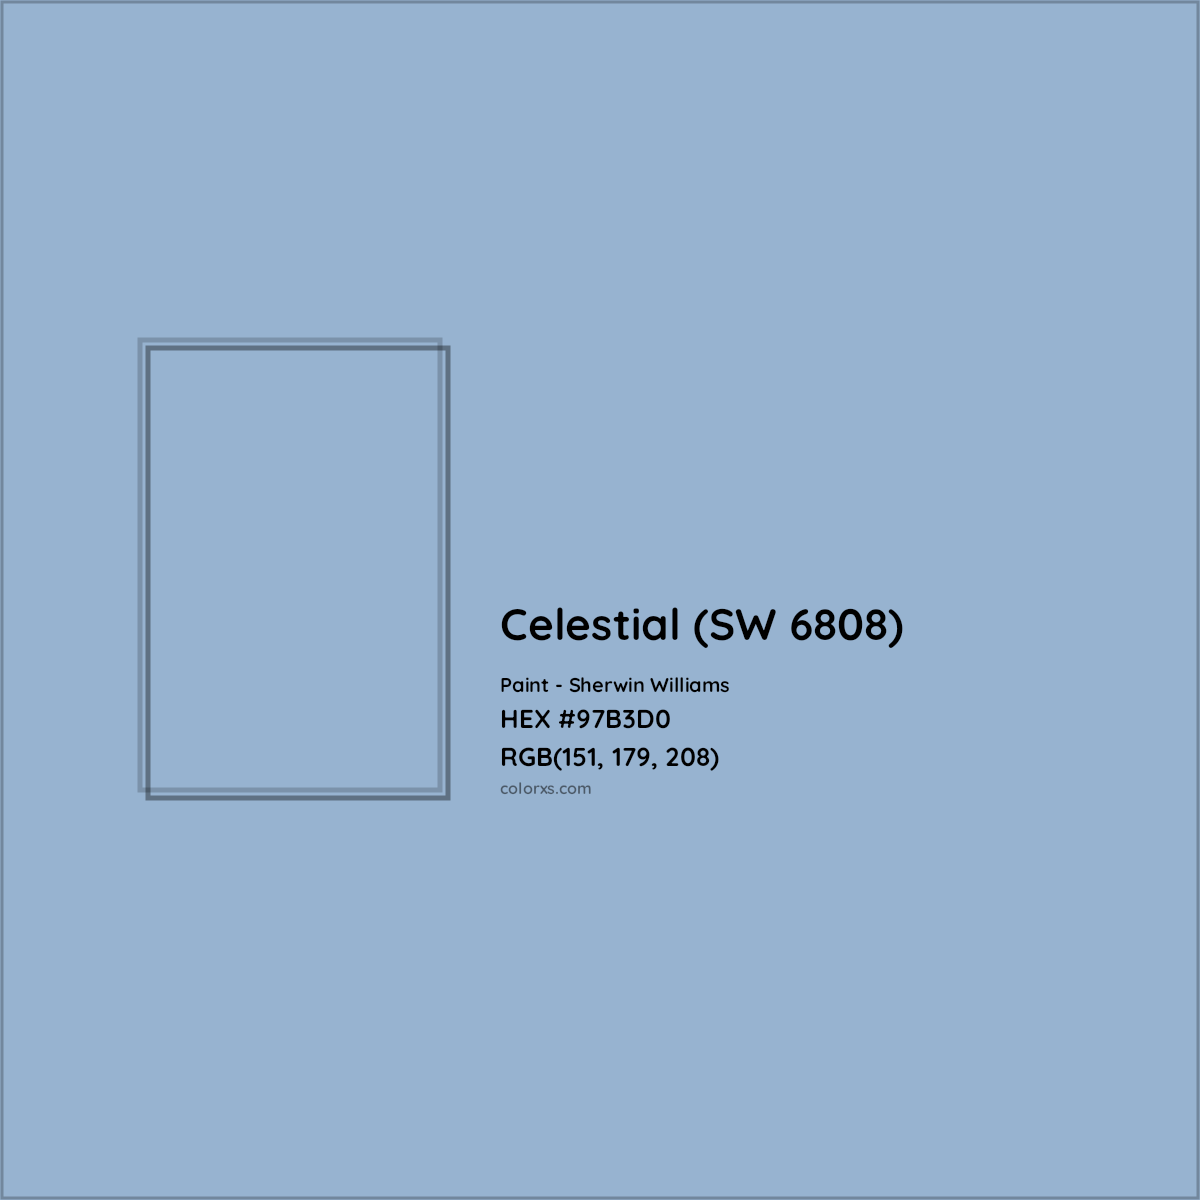 HEX #97B3D0 Celestial (SW 6808) Paint Sherwin Williams - Color Code